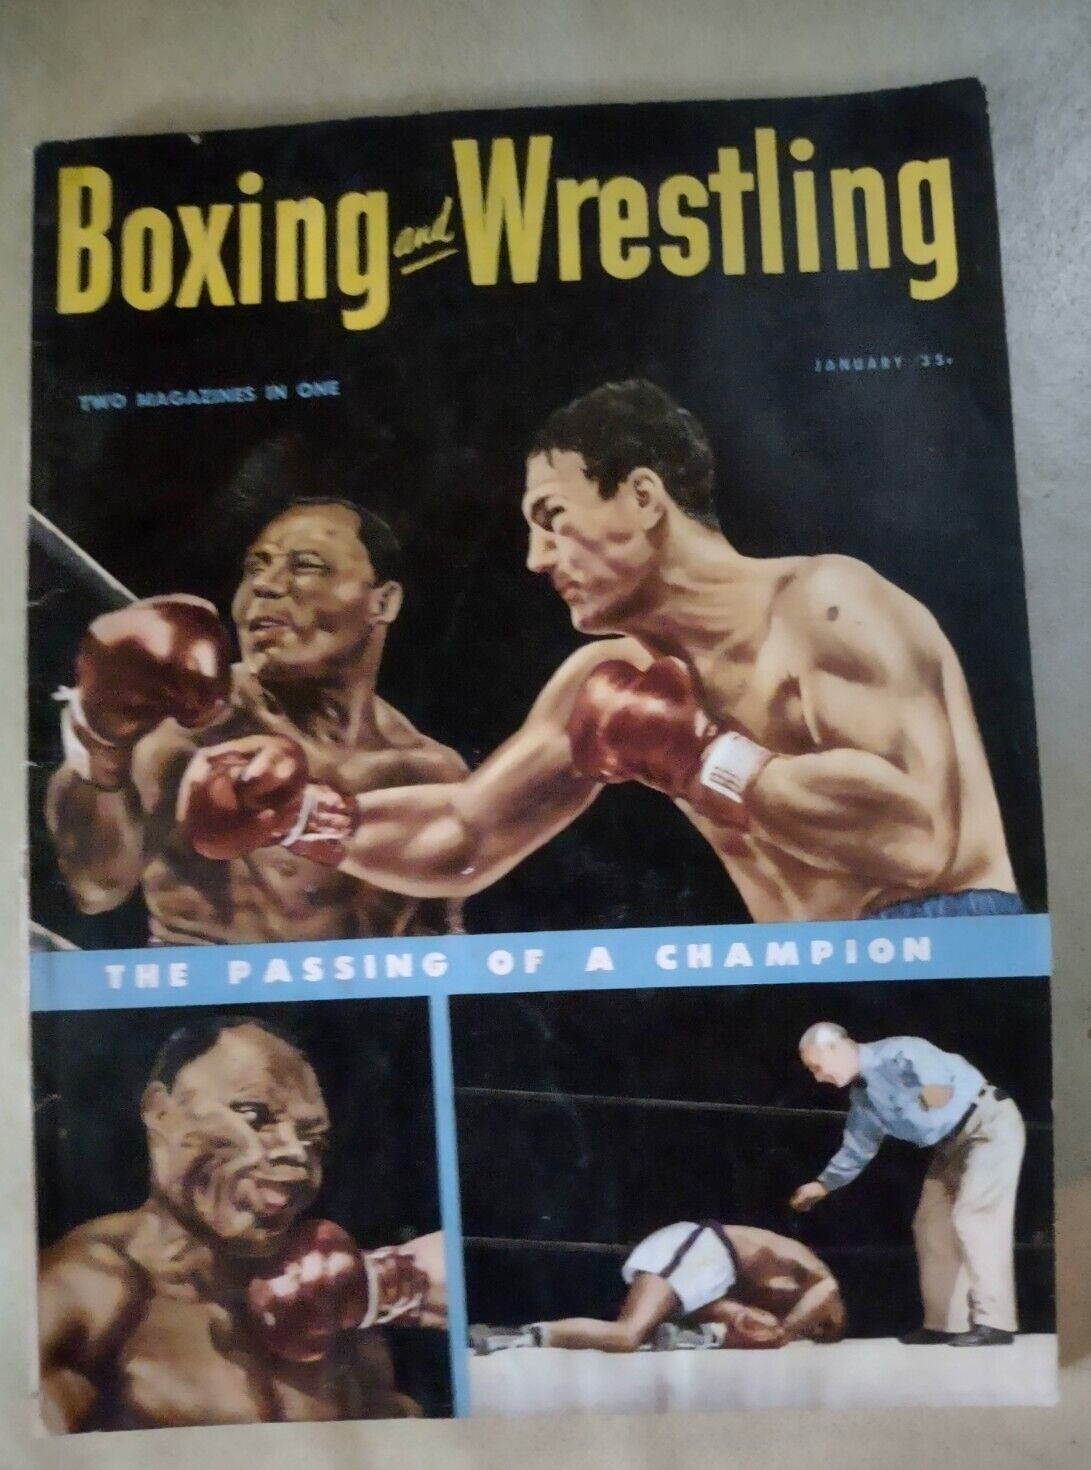 1953 Boxing and Wrestling Magazine Rocky Marciano defeats Walcott